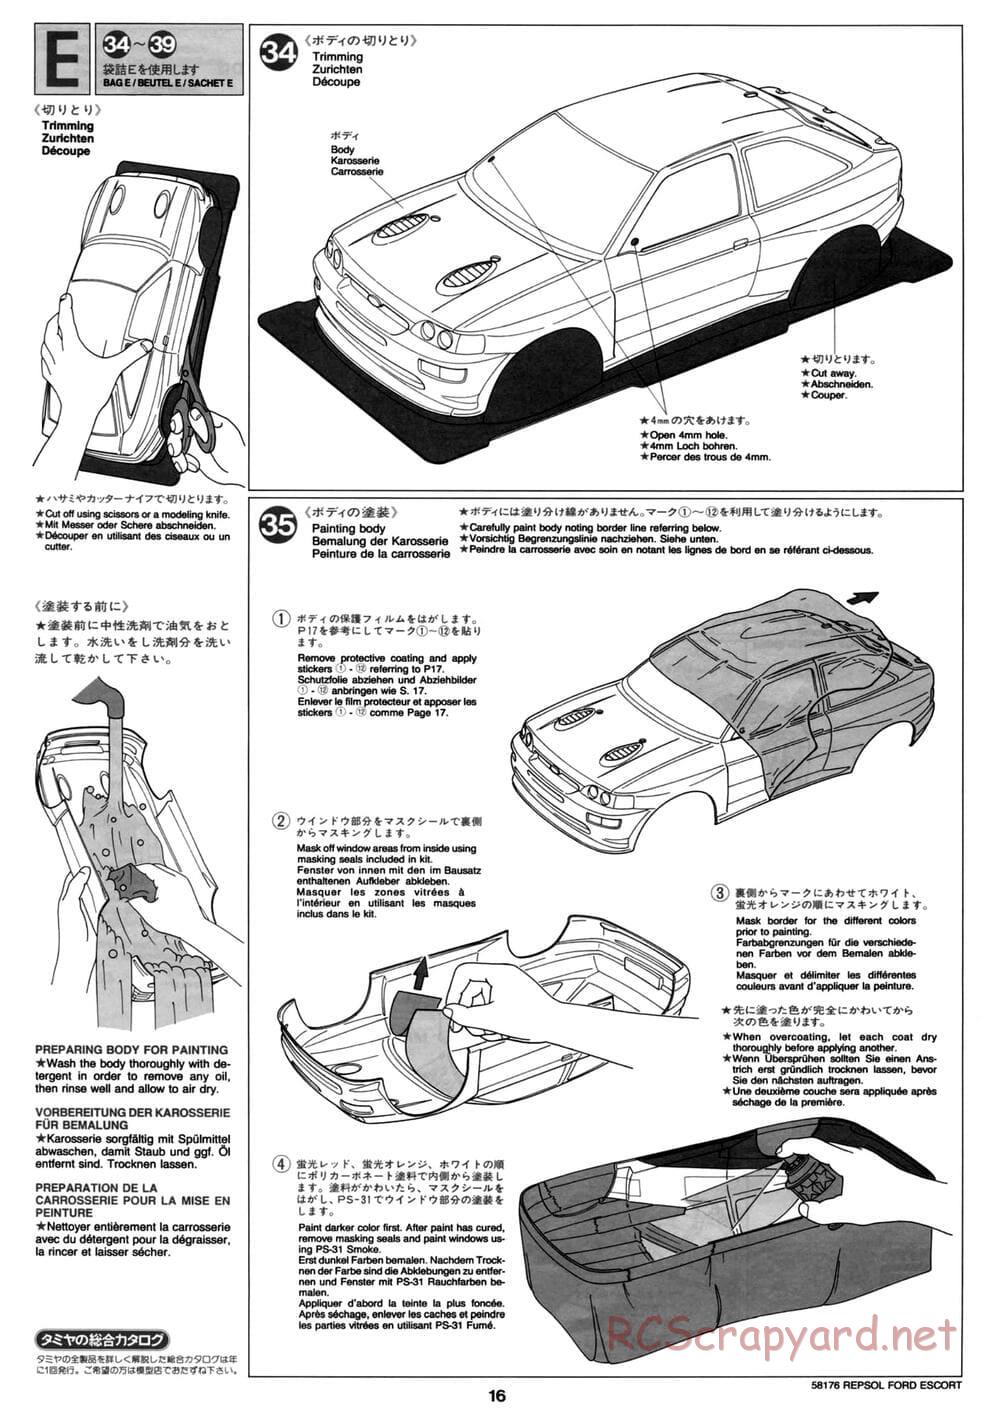 Tamiya - Repsol Ford Escort RS Cosworth - TA-02 Chassis - Manual - Page 16